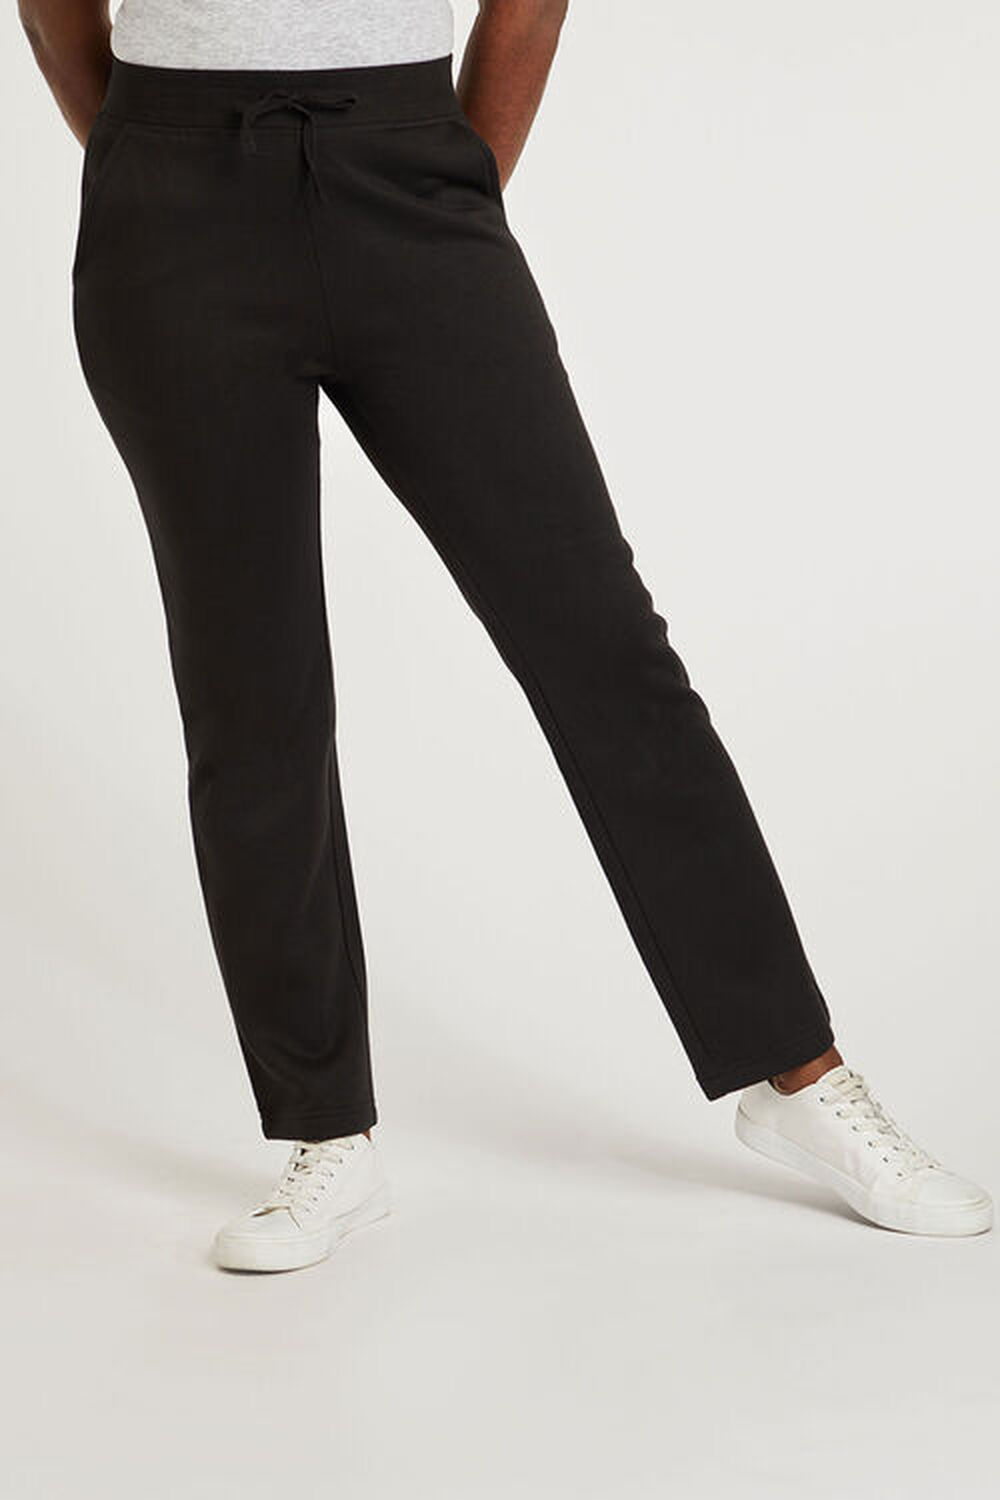 Bonmarche Jog Pants - Black - Size 14